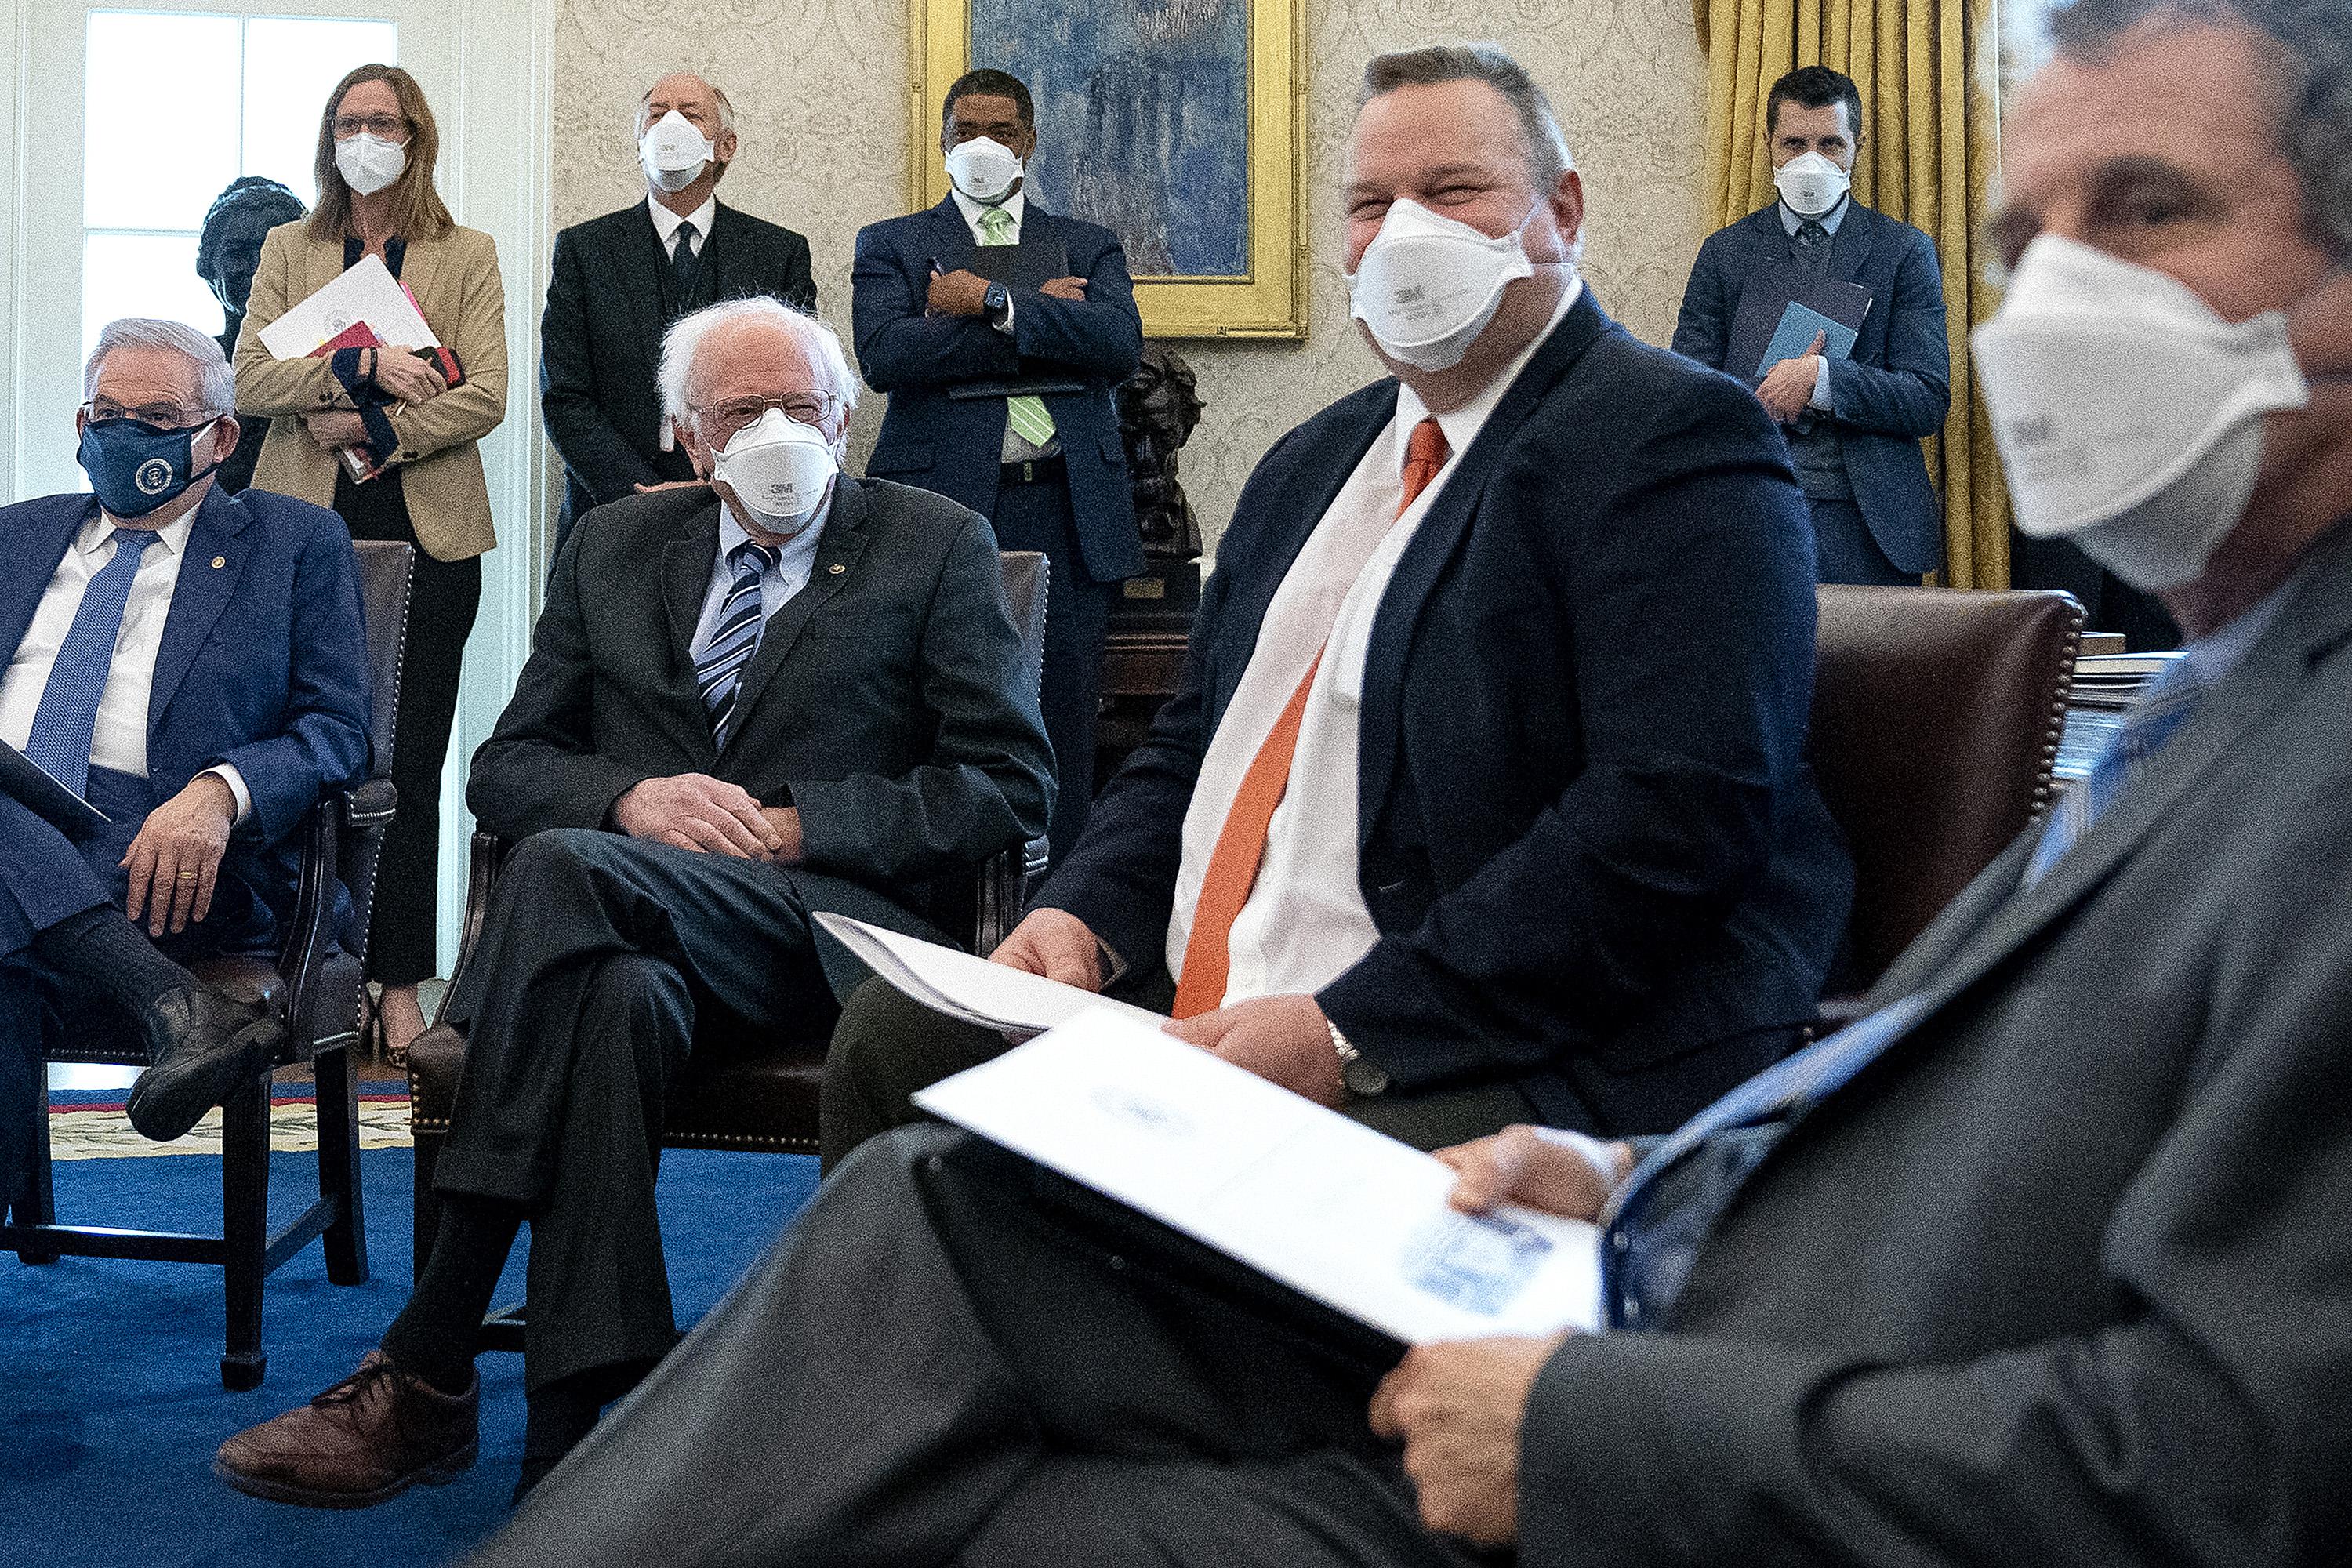 Democratic senators meet with President Joe Biden to discuss COVID relief legislation on February 03, 2021 in Washington, DC. 